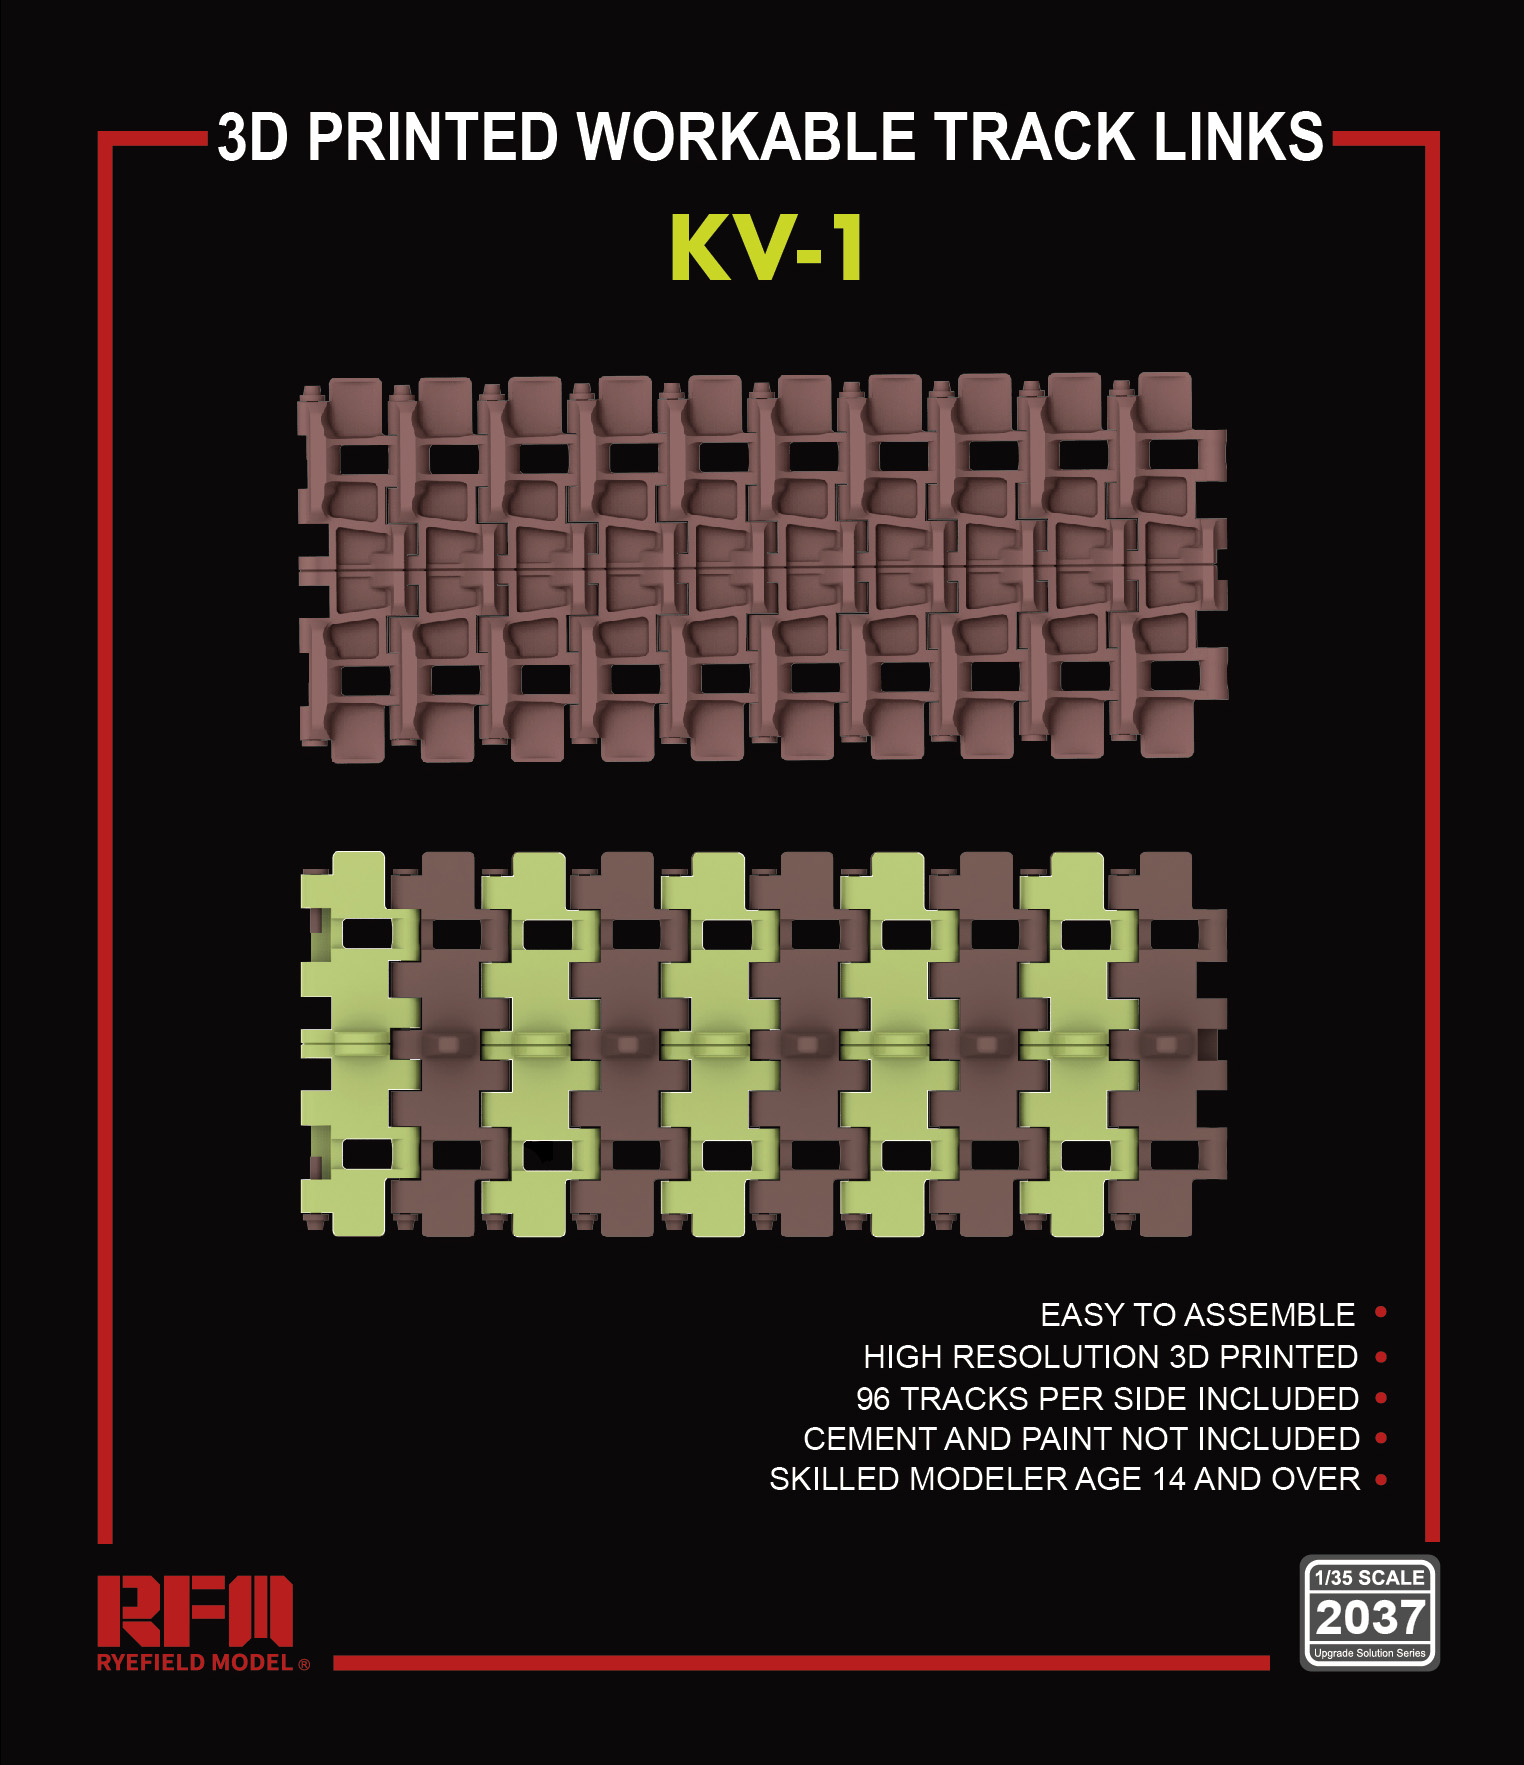 3D printed Workable track links for KV-1